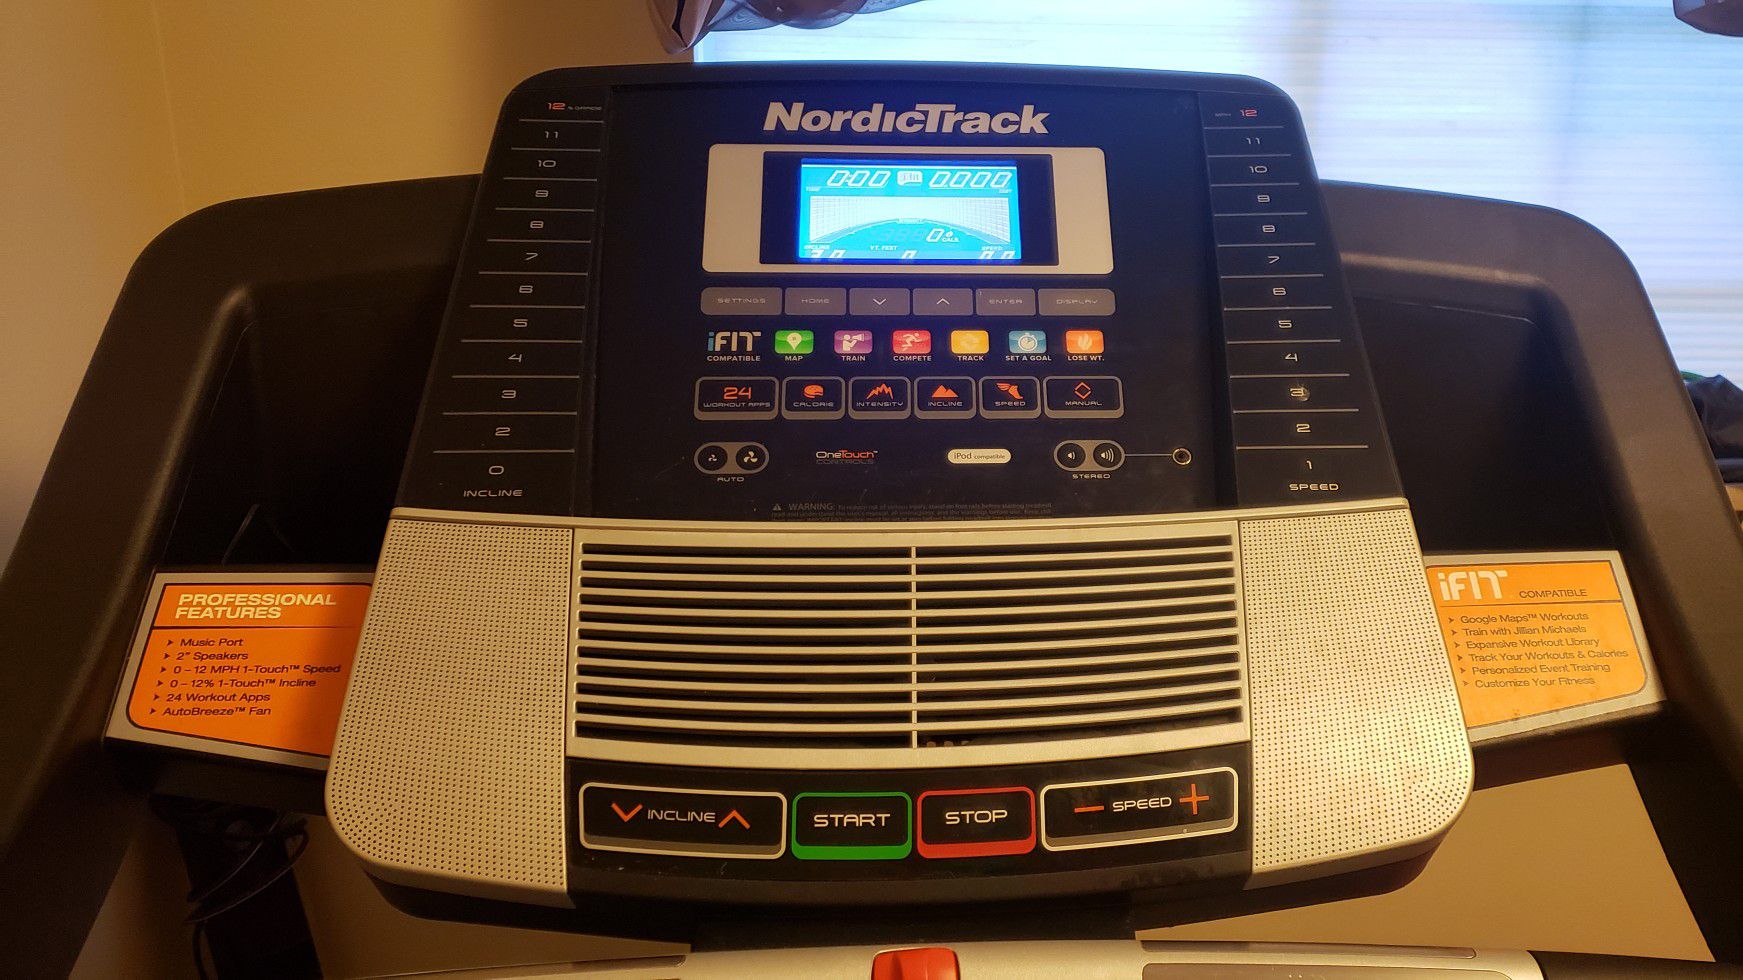 NordicTrack C700 iFit Treadmill